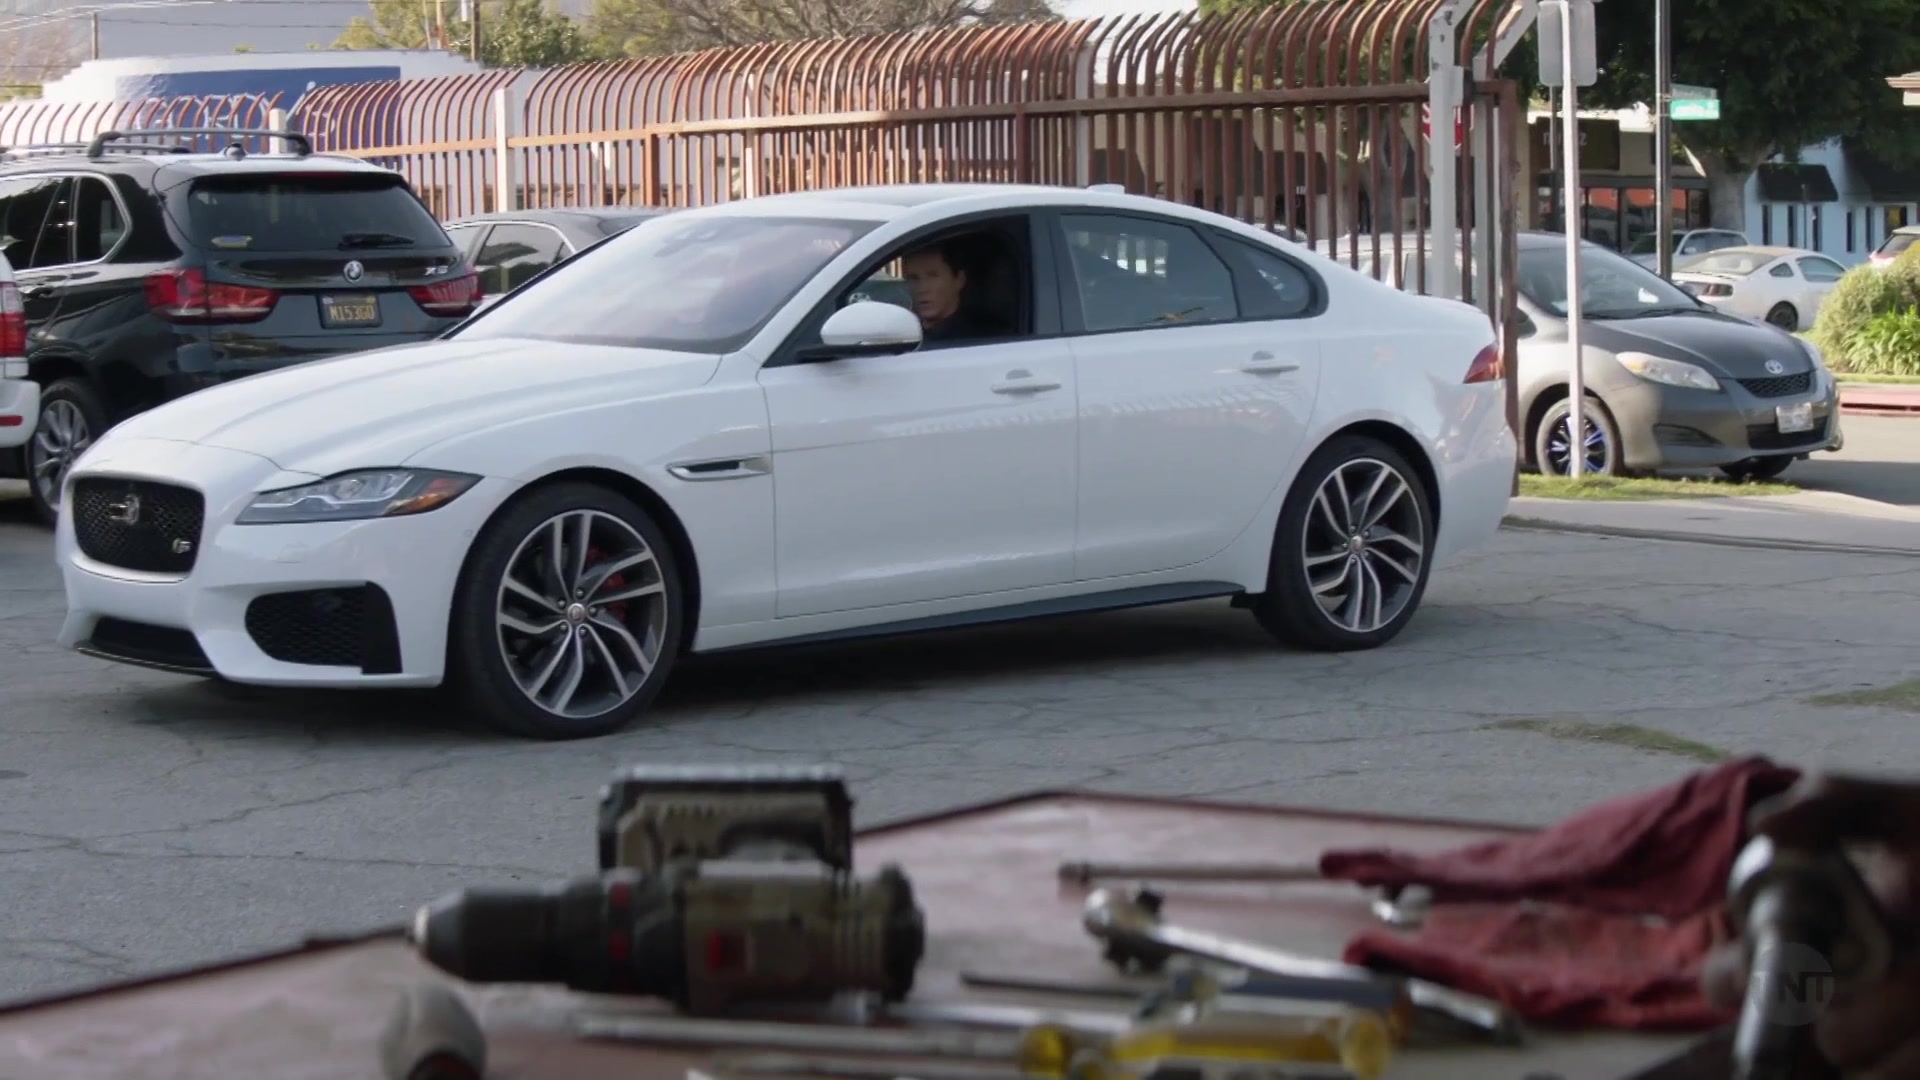 Jaguar XF (X260) White Car Of Shawn Hatosy As Andrew 'Pope' Cody In Animal  Kingdom S05E02 